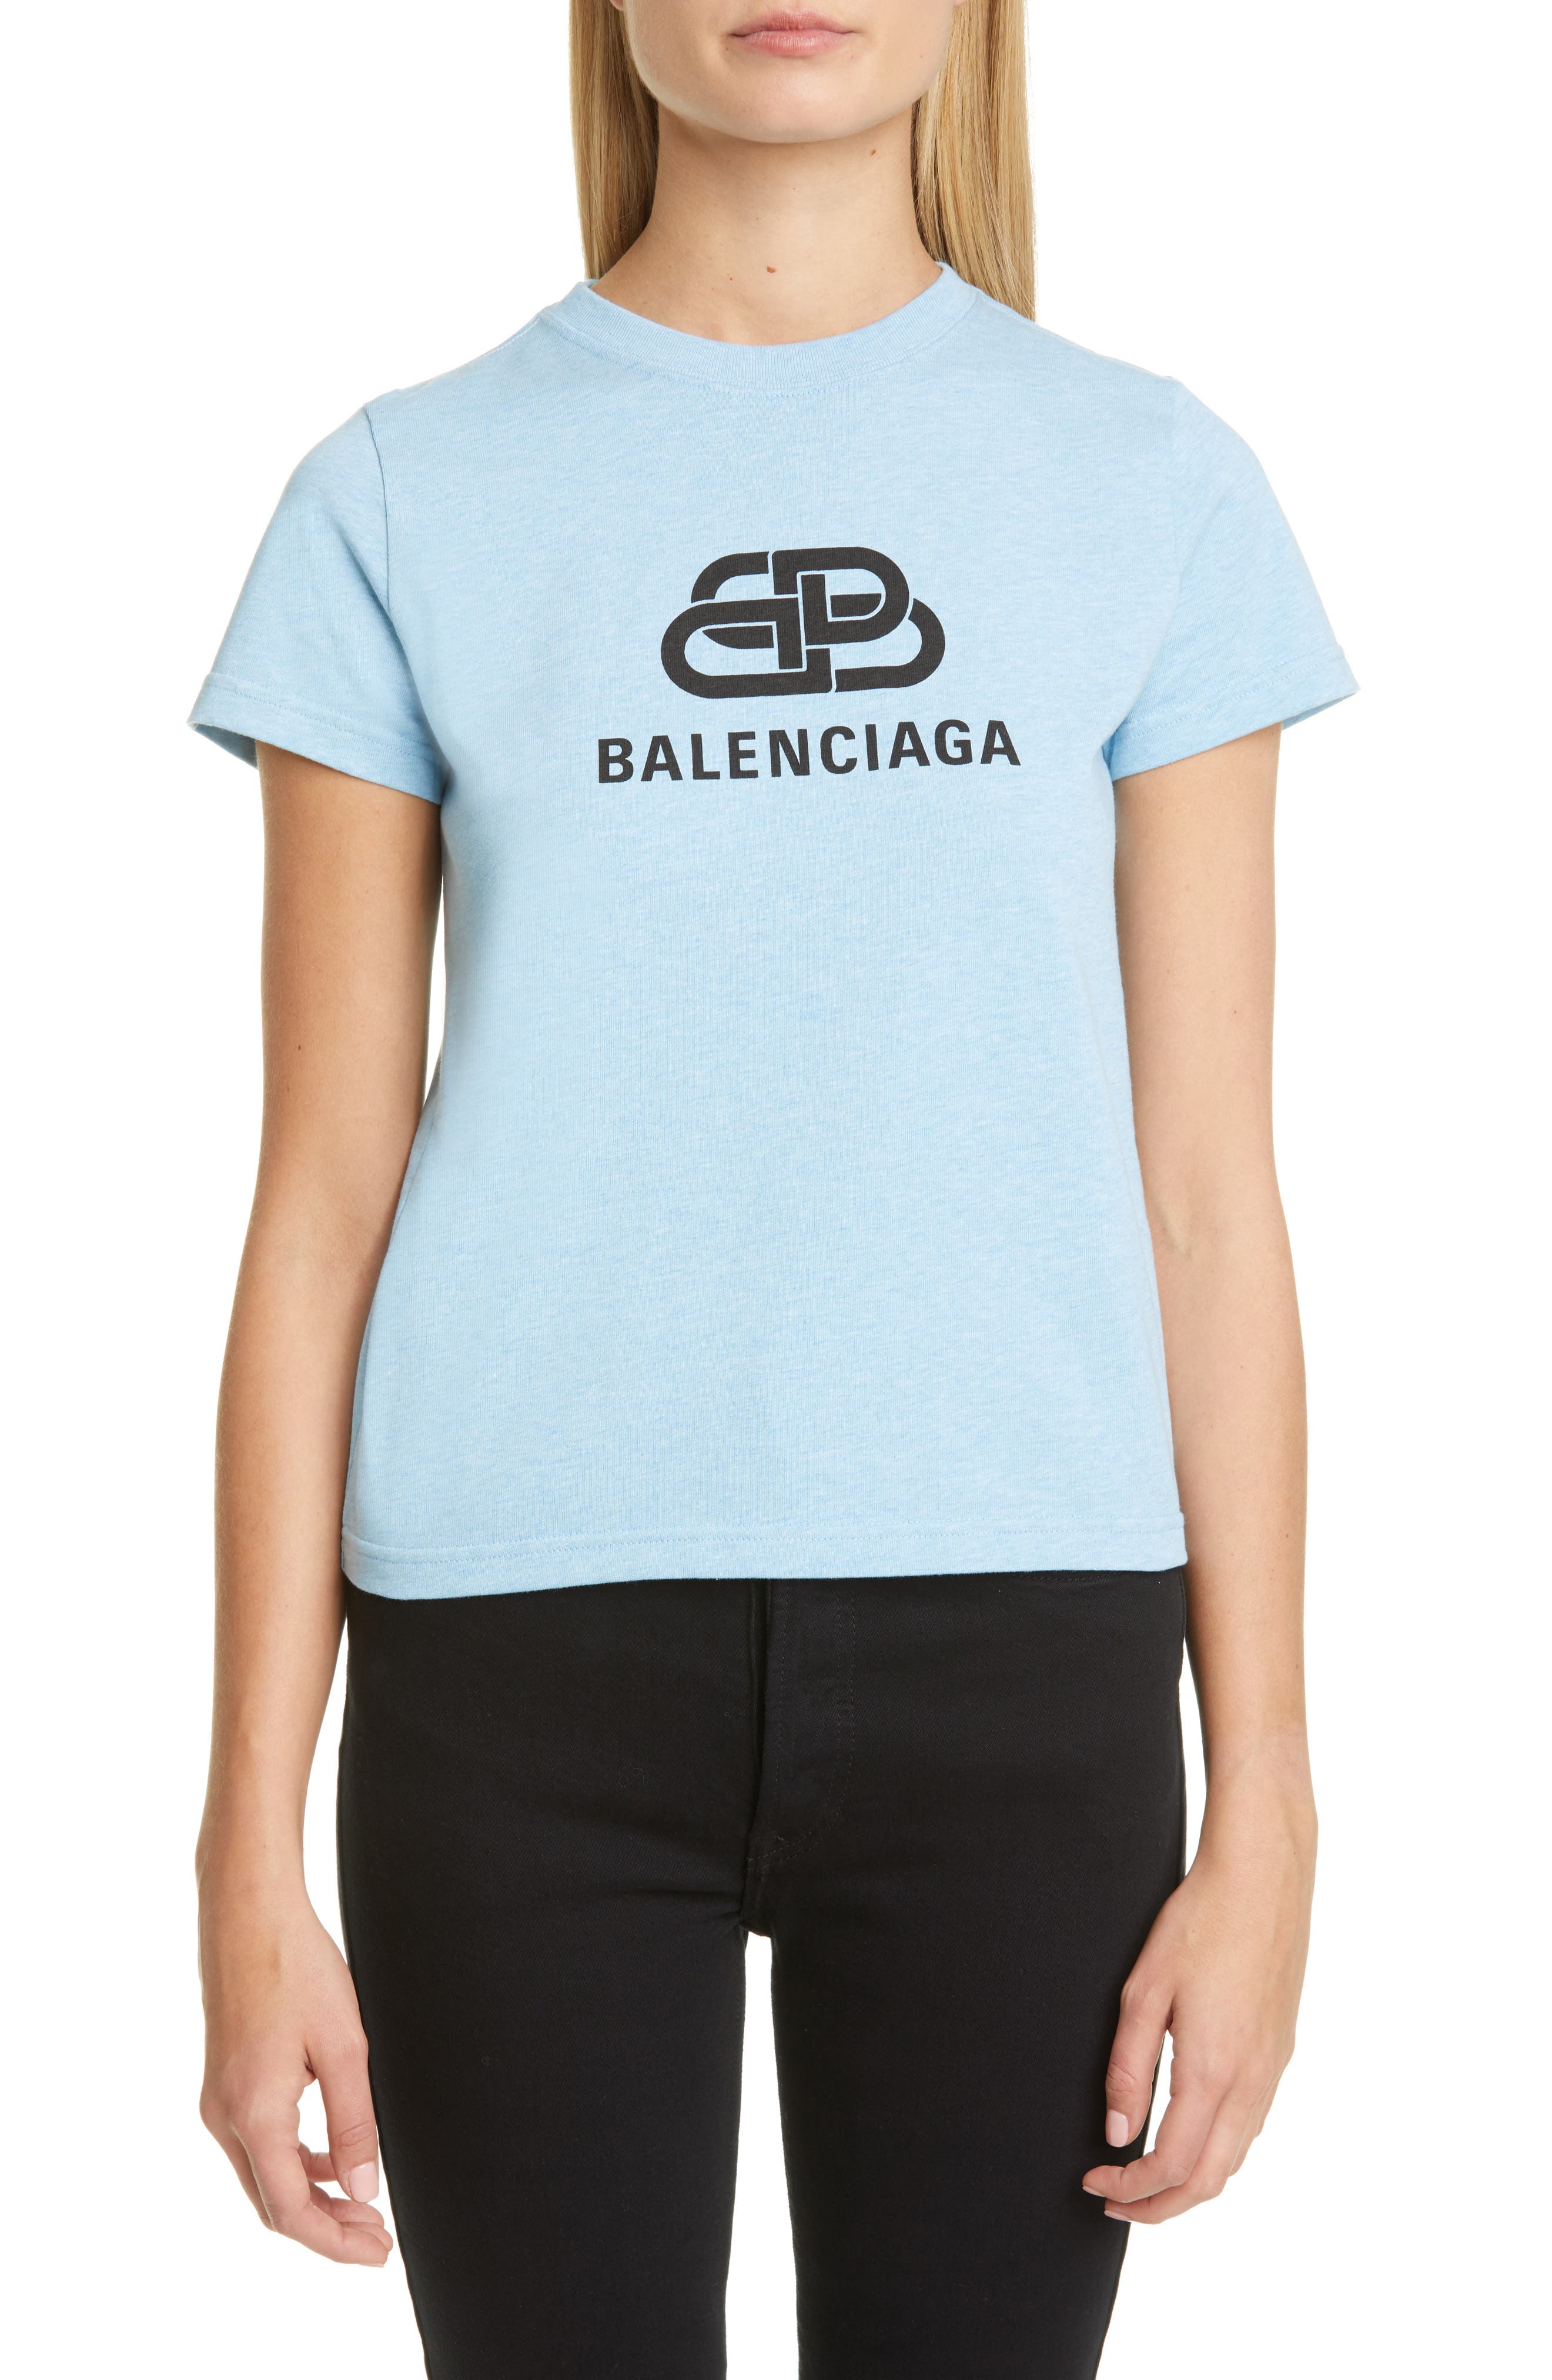 women's balenciaga t shirt dress